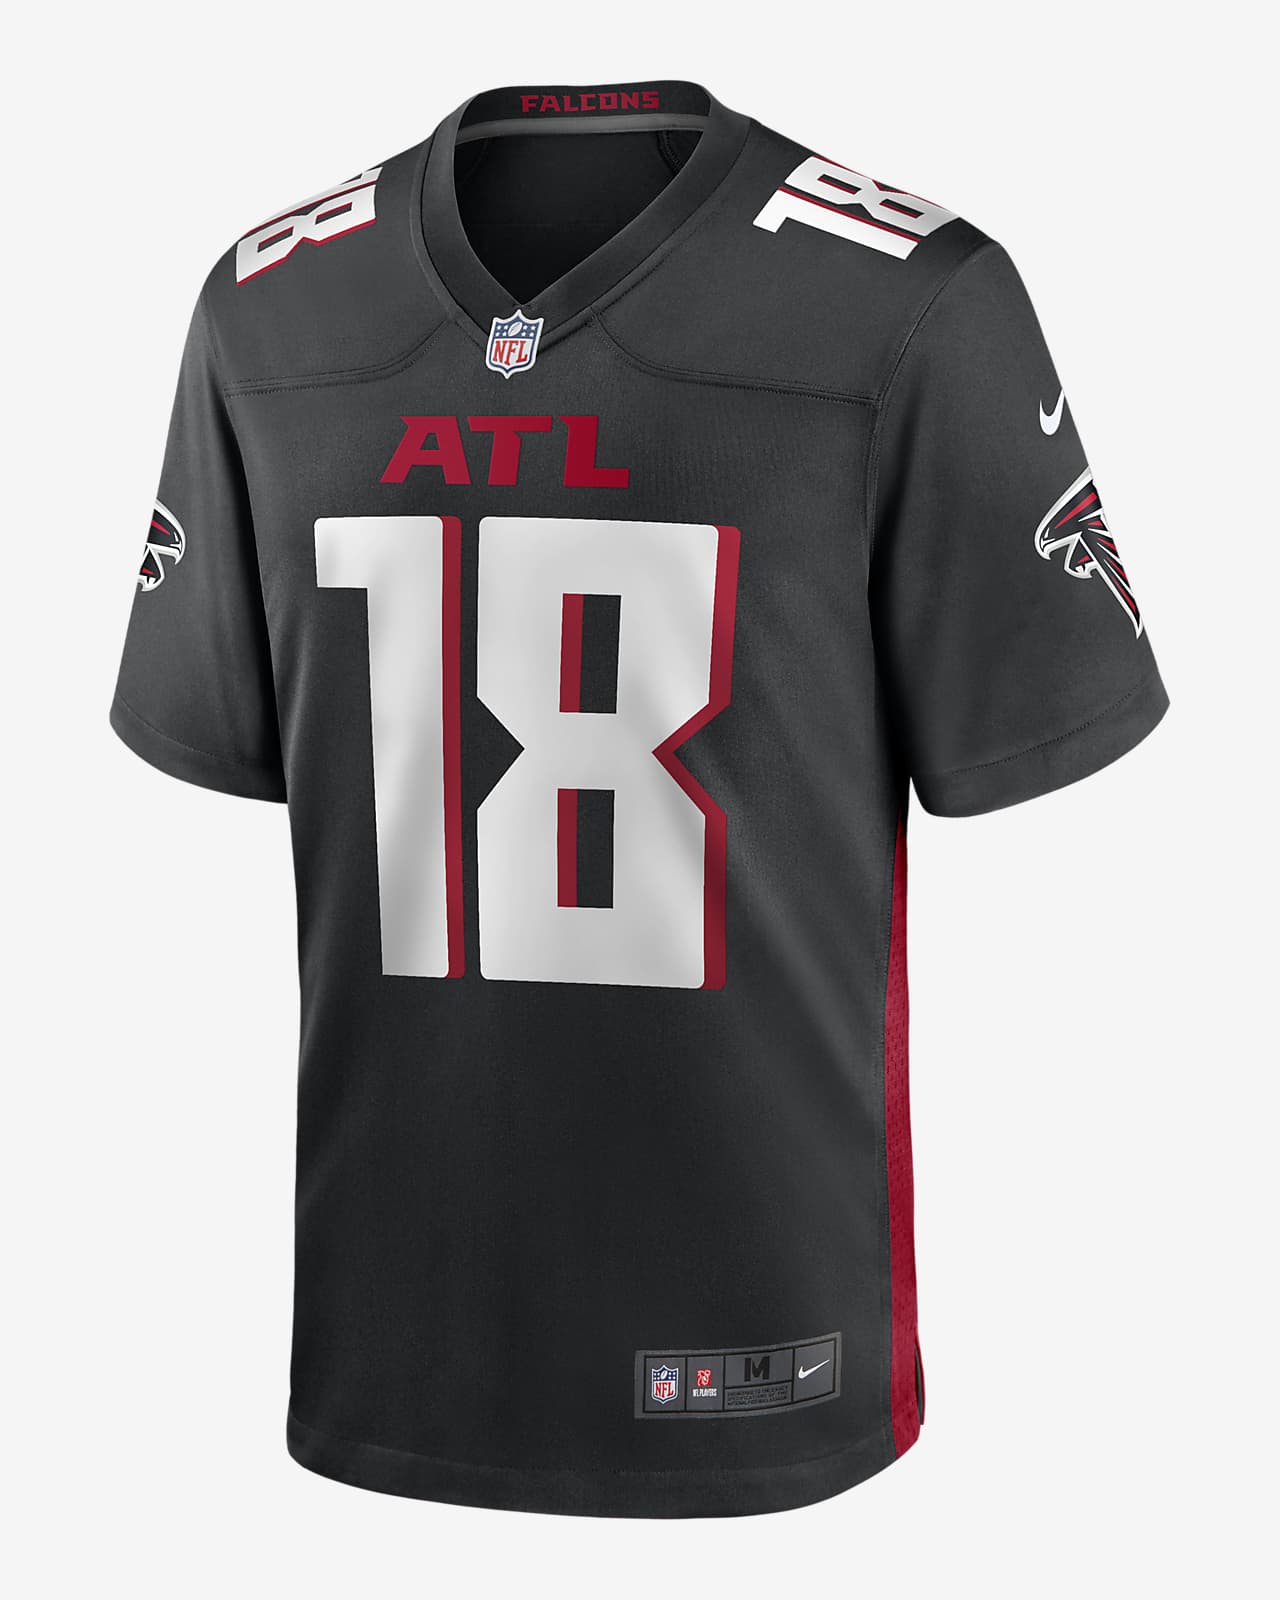 Jersey de fútbol americano Nike de la NFL Game para hombre Kirk Cousins Atlanta Falcons